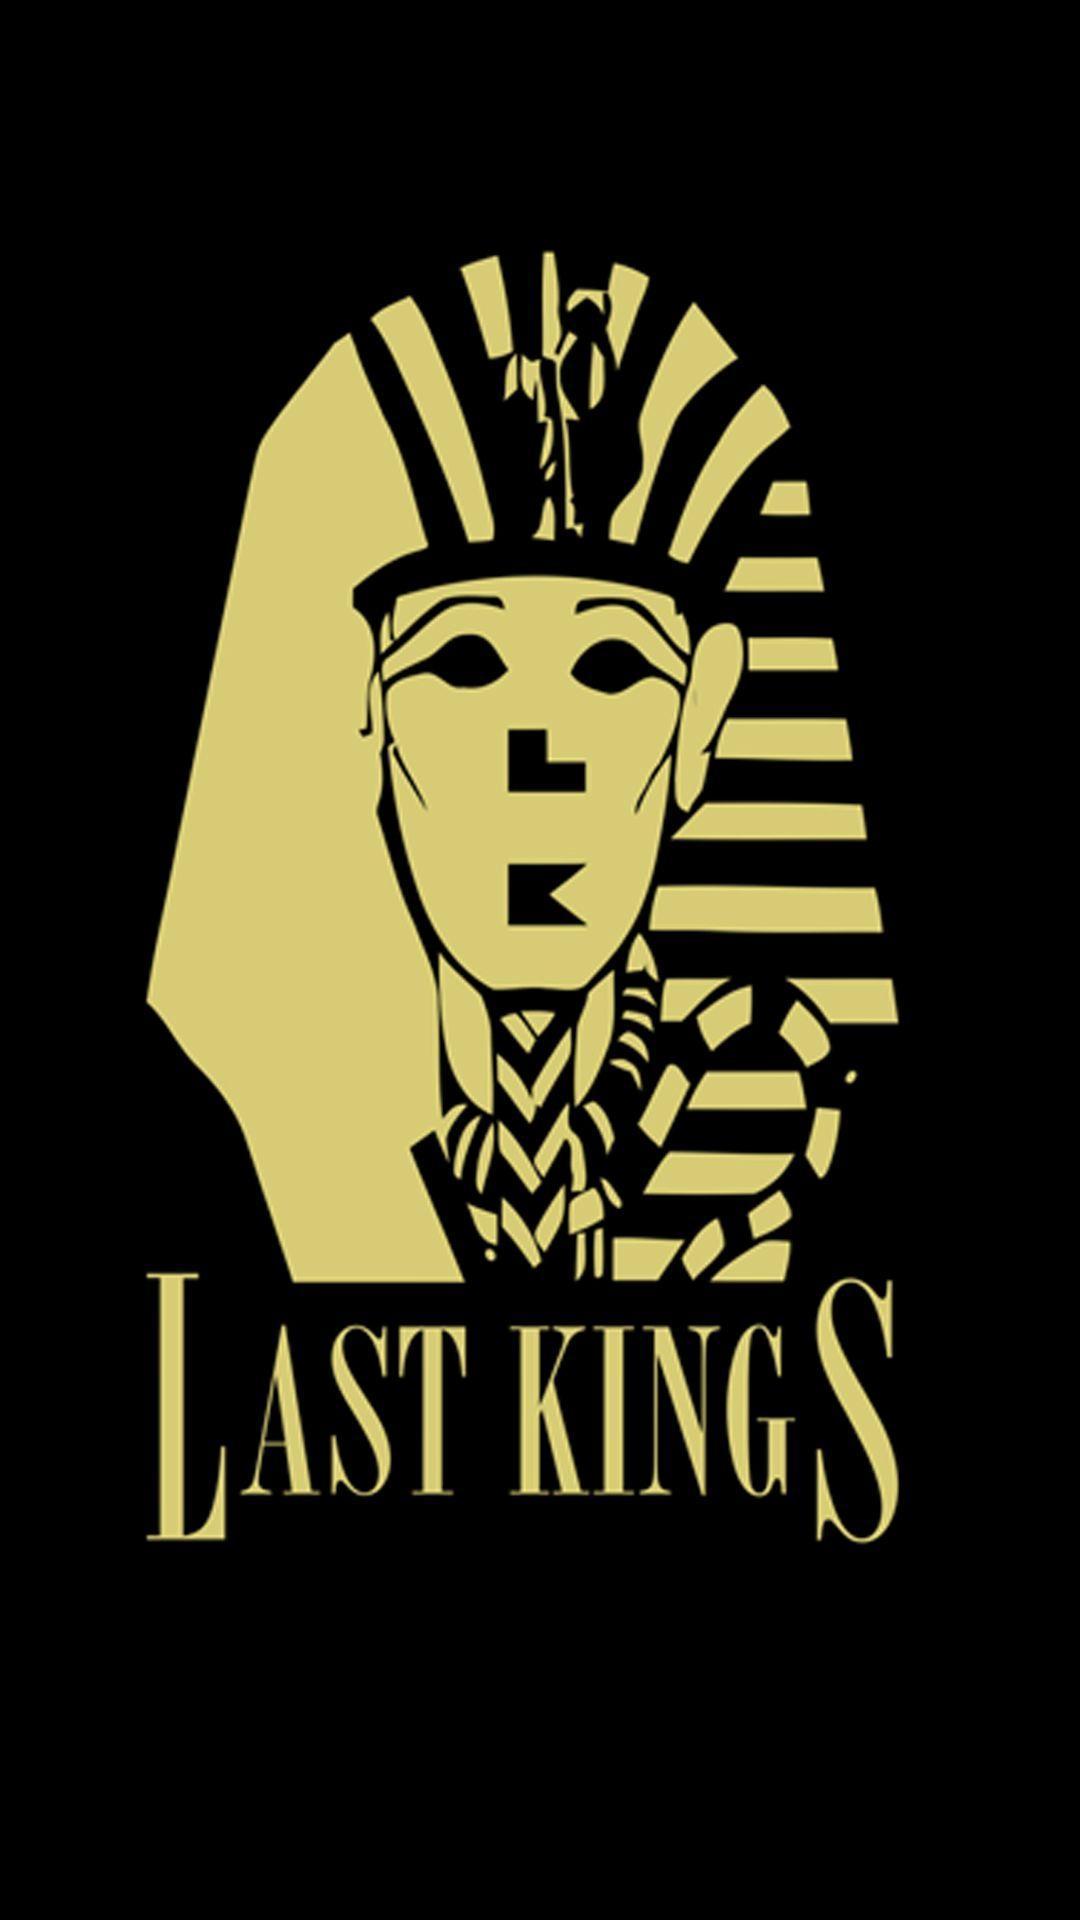 Tyga Logo - Gold Last Kings Logo Wallpapers - Top Free Gold Last Kings Logo ...